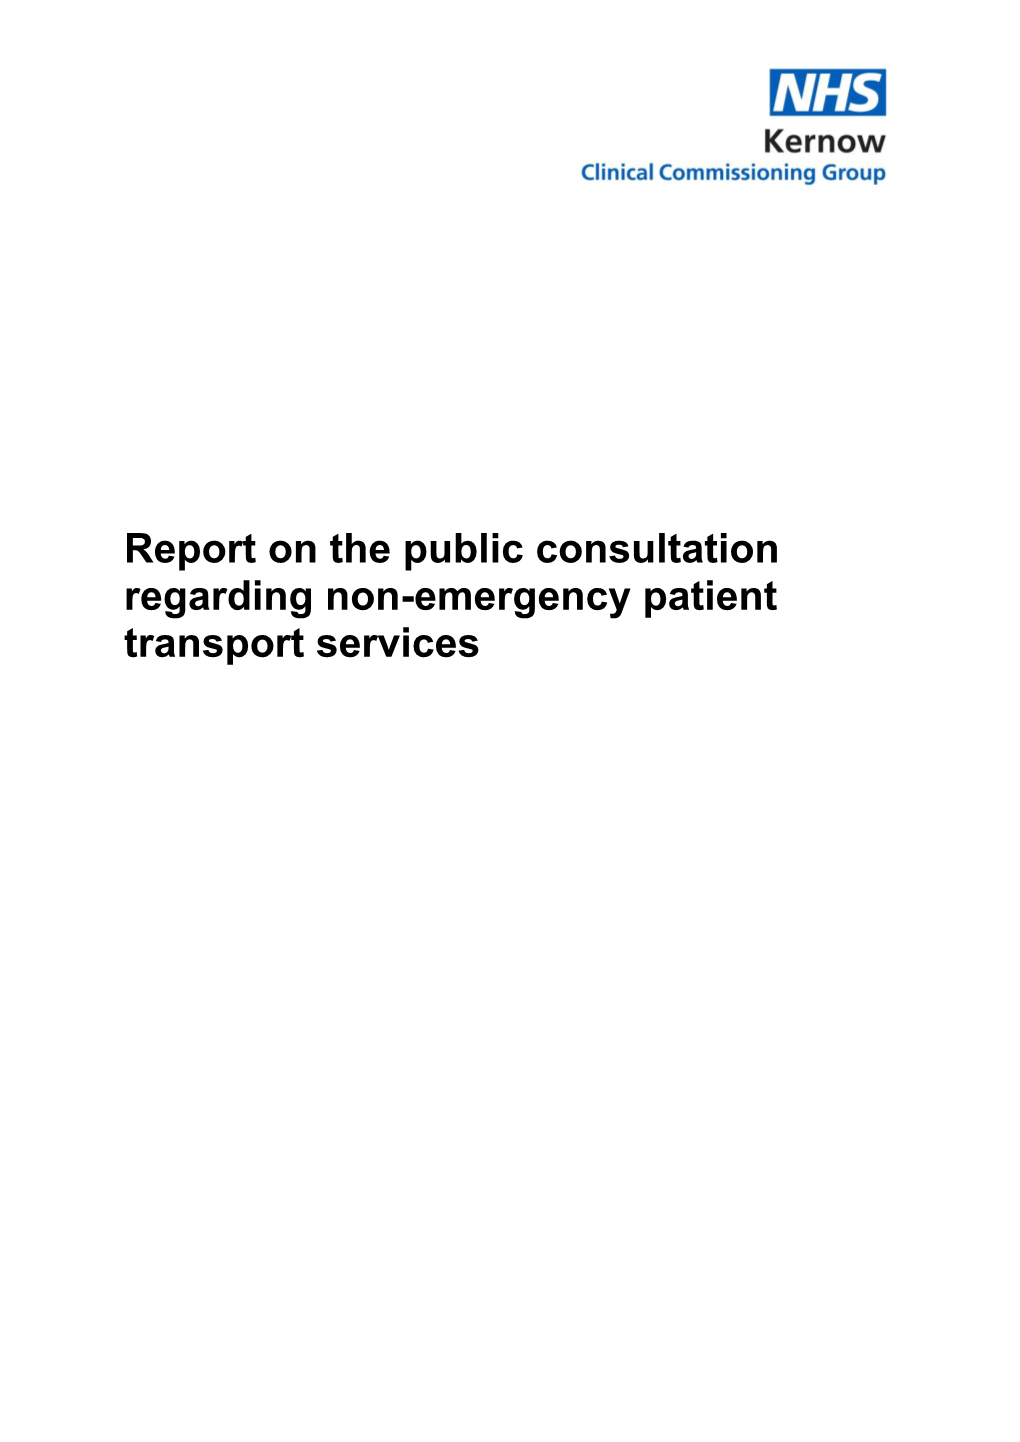 Report on the Public Consultation Regarding Non-Emergency Patient Transport Services